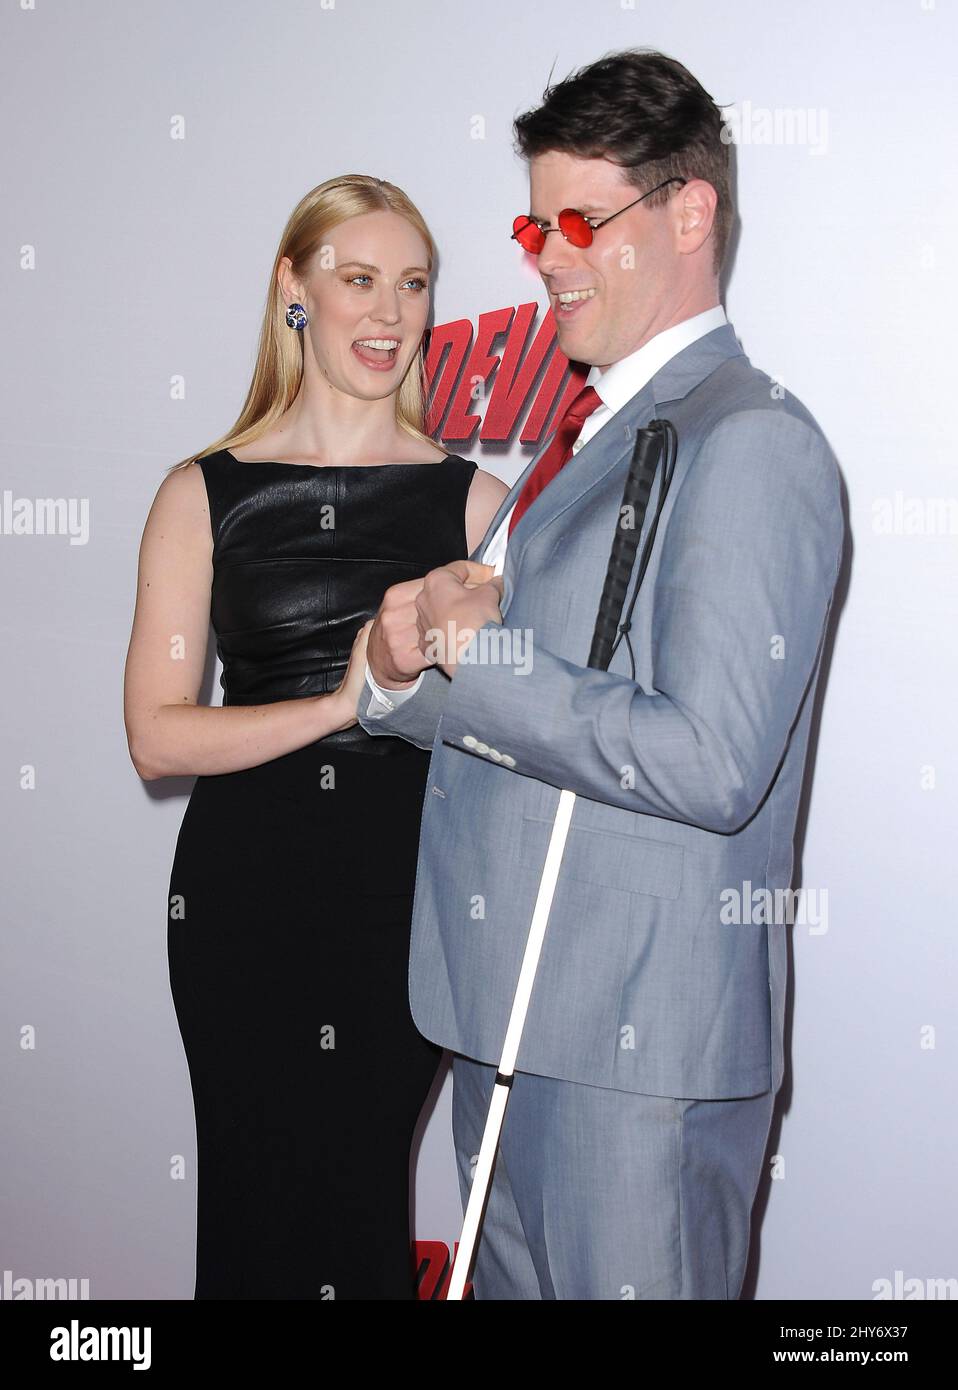 Deborah Ann Woll, E.J. Scott attending the 'Daredevil' premiere in Los Angeles Stock Photo